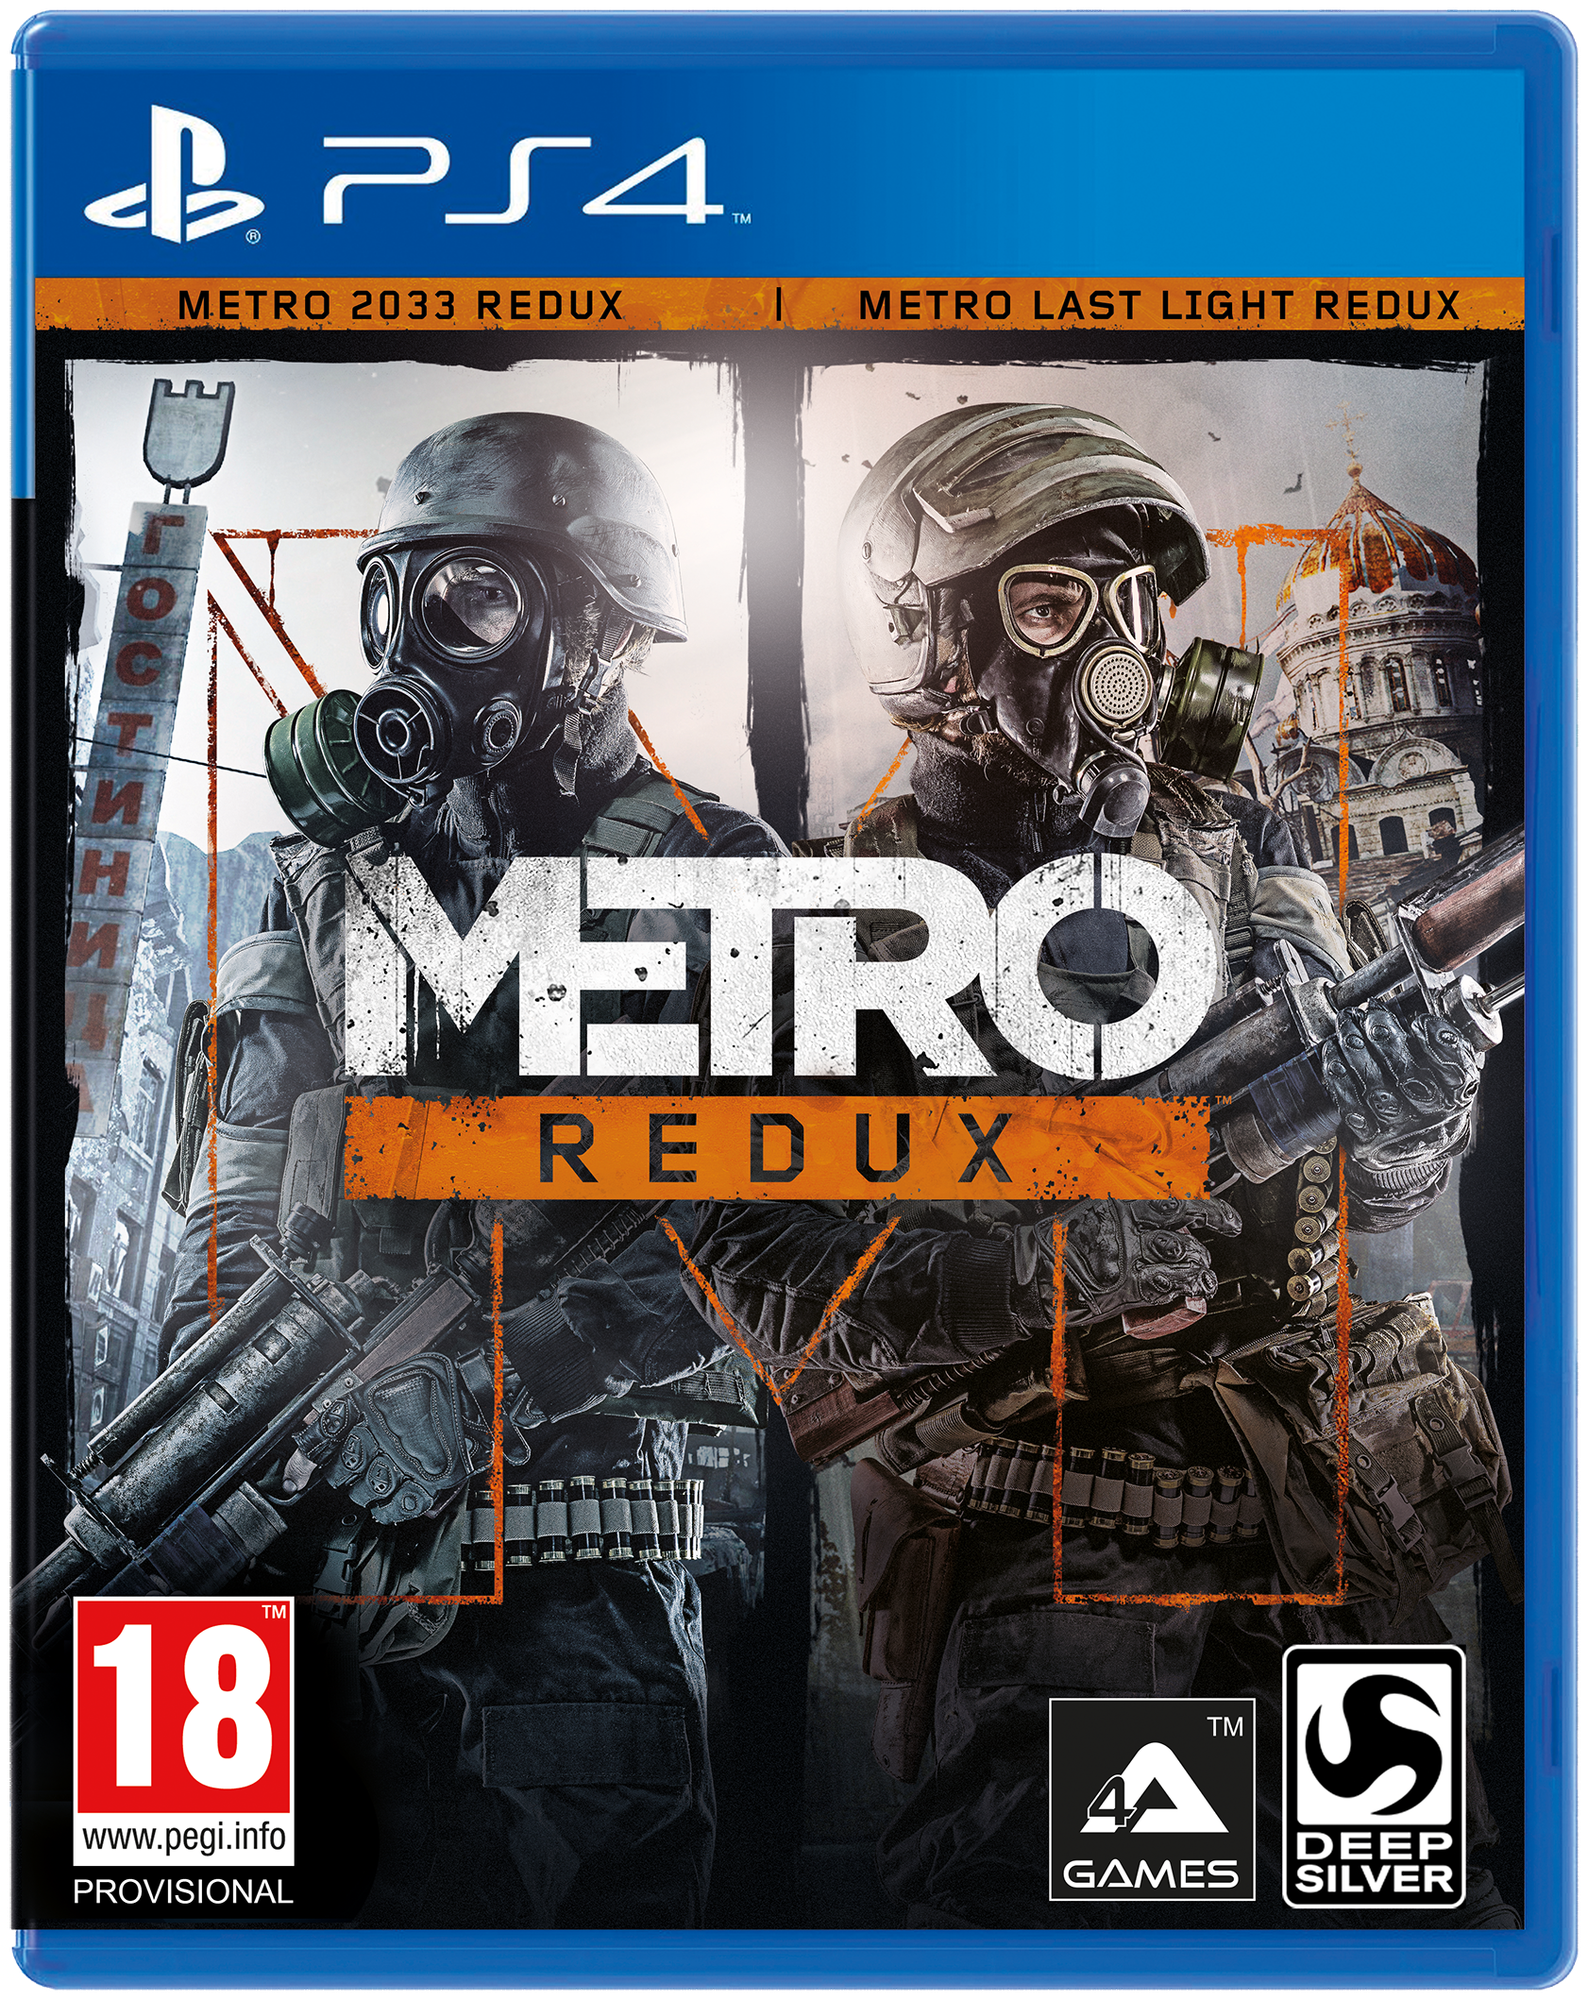 Metro Redux [Возвращение](PS4)